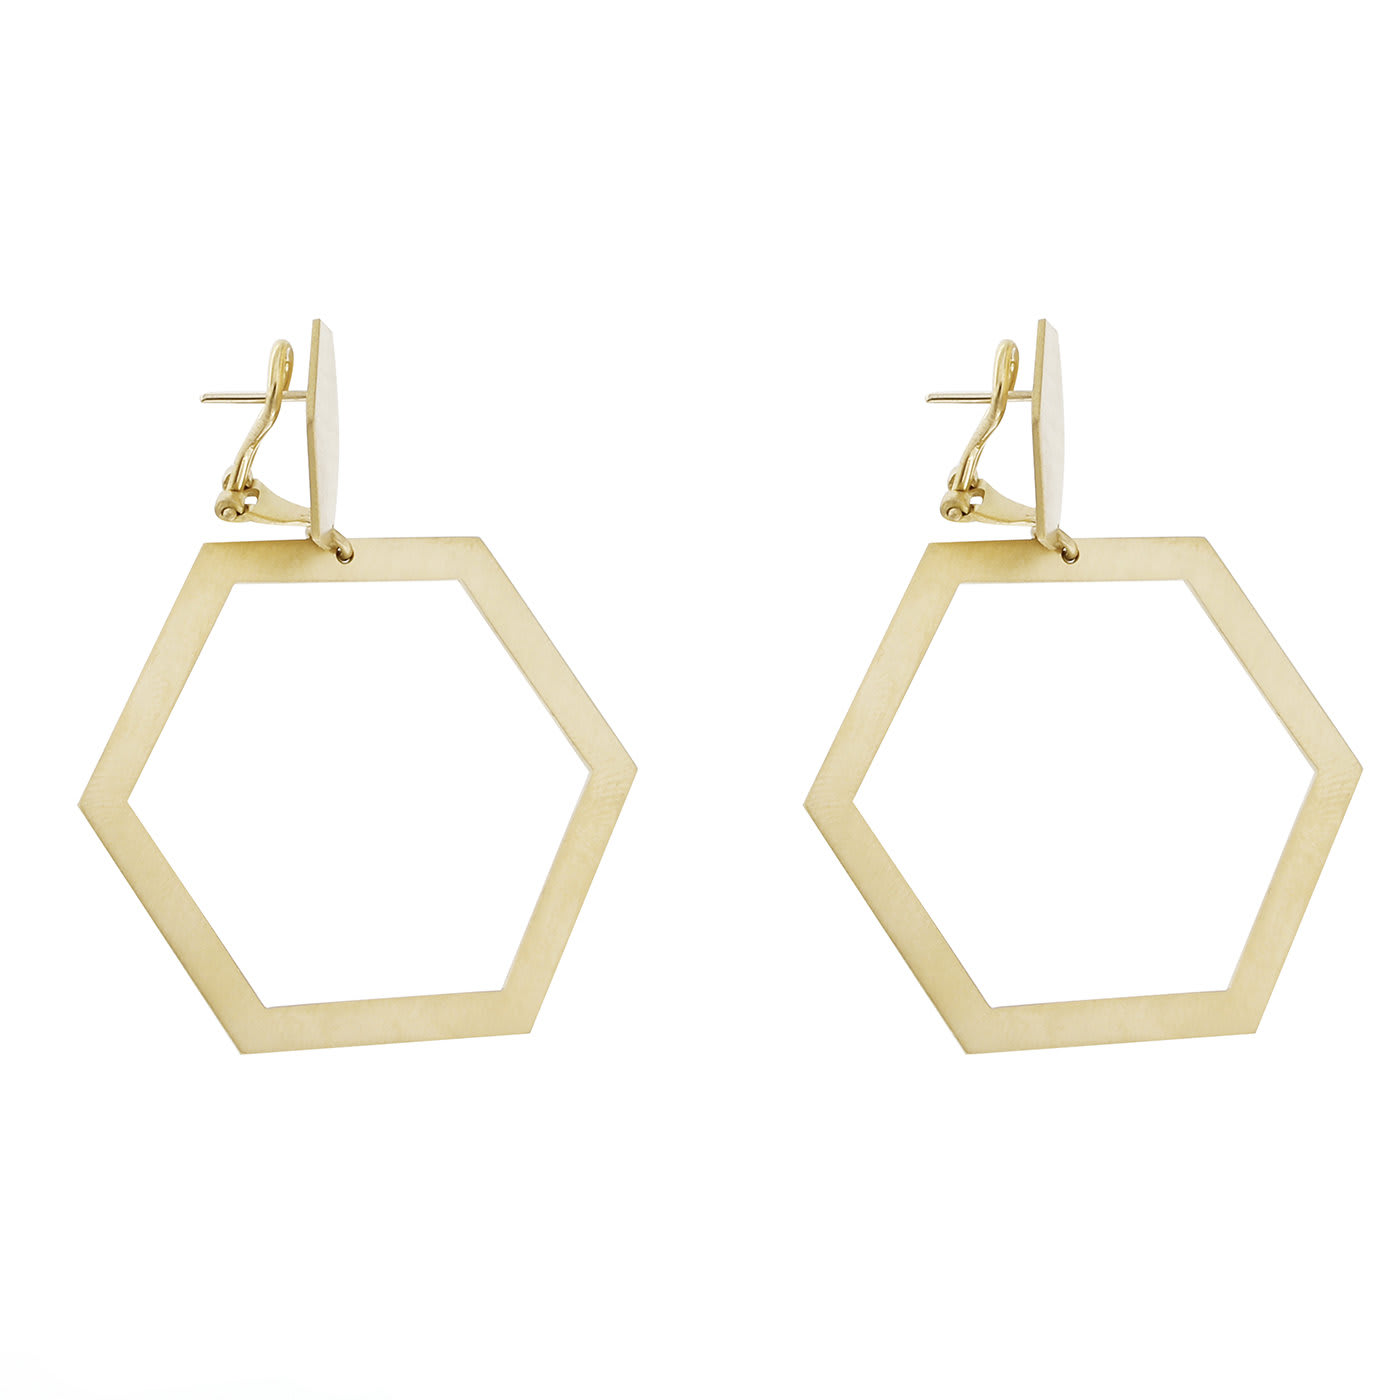 Hexagonal Gold Earrings - Jona